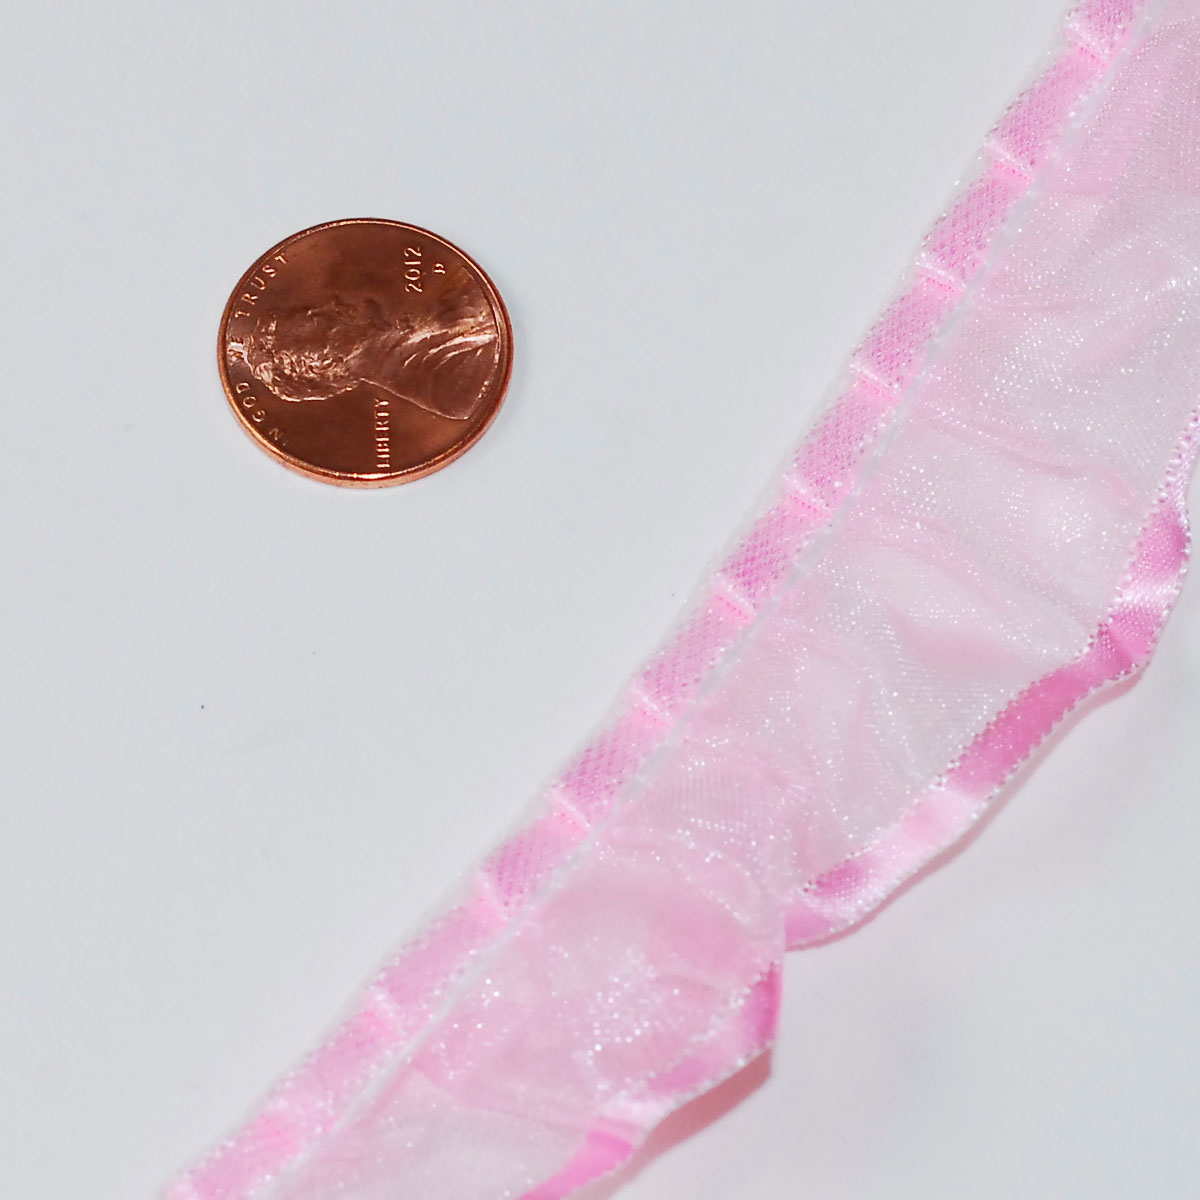 Lace Ruffle Ribbon Trim 1" 25 Yards Wedding Baby Shower Craft Sewing